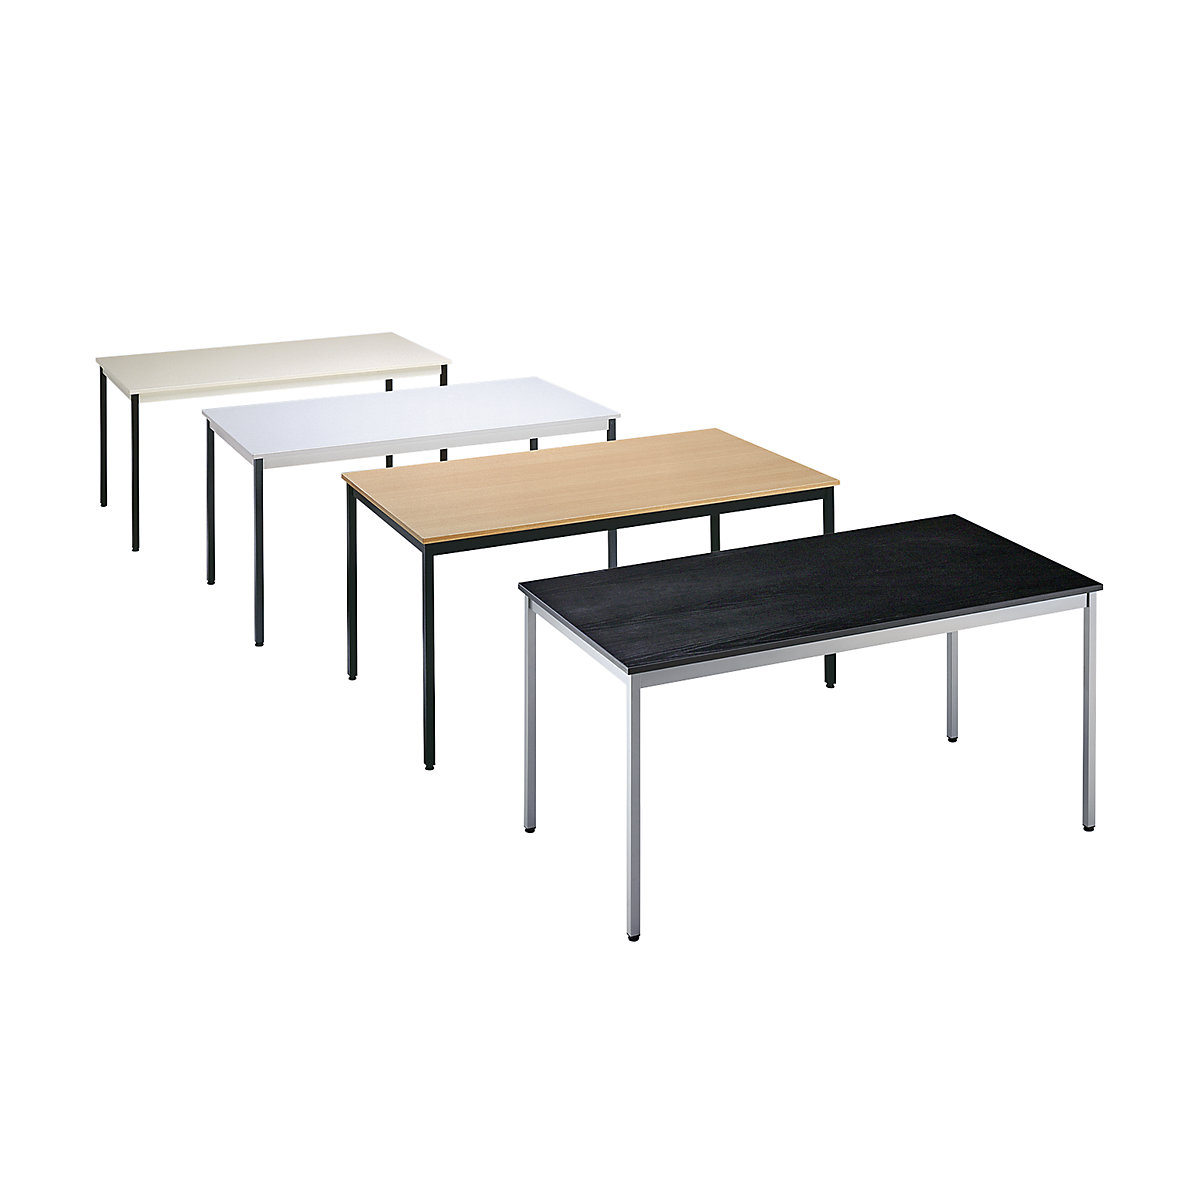 Universele tafel – eurokraft basic, rechthoekig, b x h = 1200 x 740 mm, diepte 600 mm, blad essenhoutdecor zwart, frame blank aluminiumkleurig-1